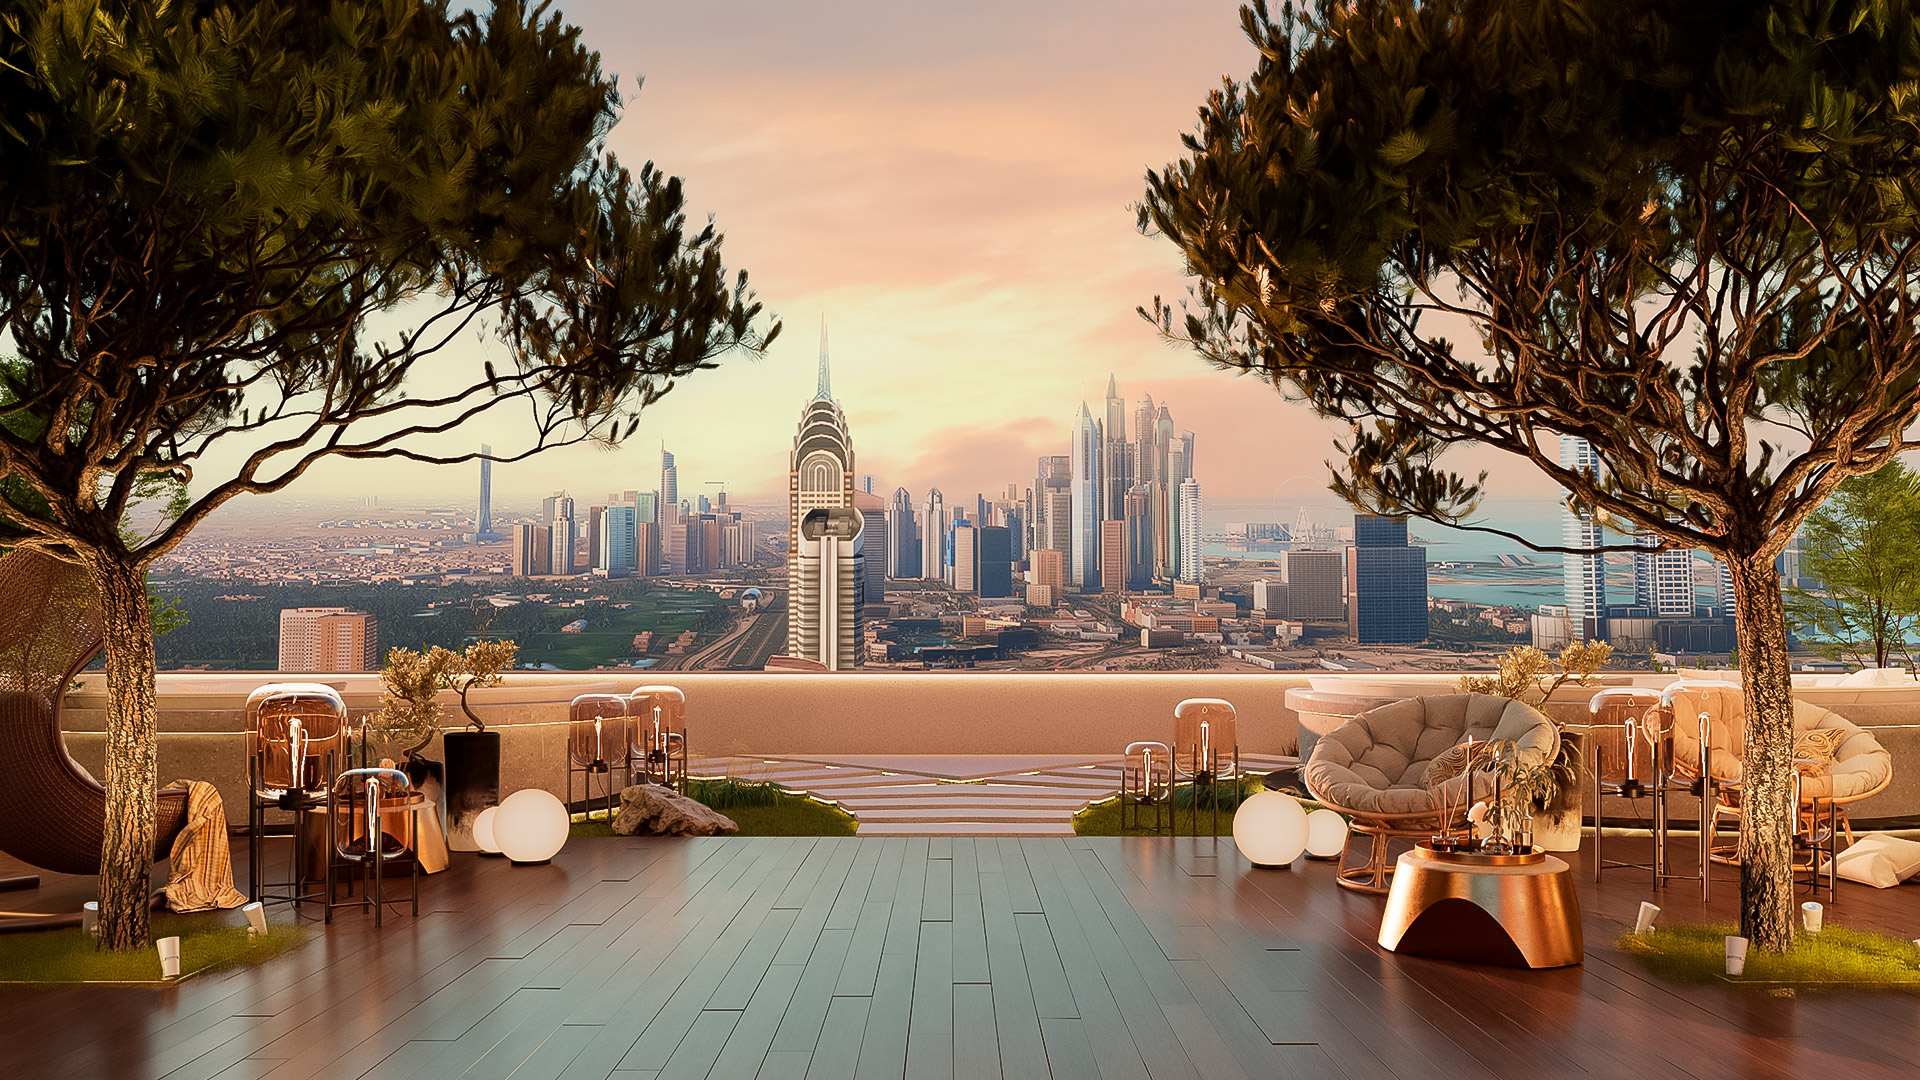 THE BILTMORE RESIDENCES SUFOUH by GJ Properties in Al Sufouh, Dubai, UAE - 4